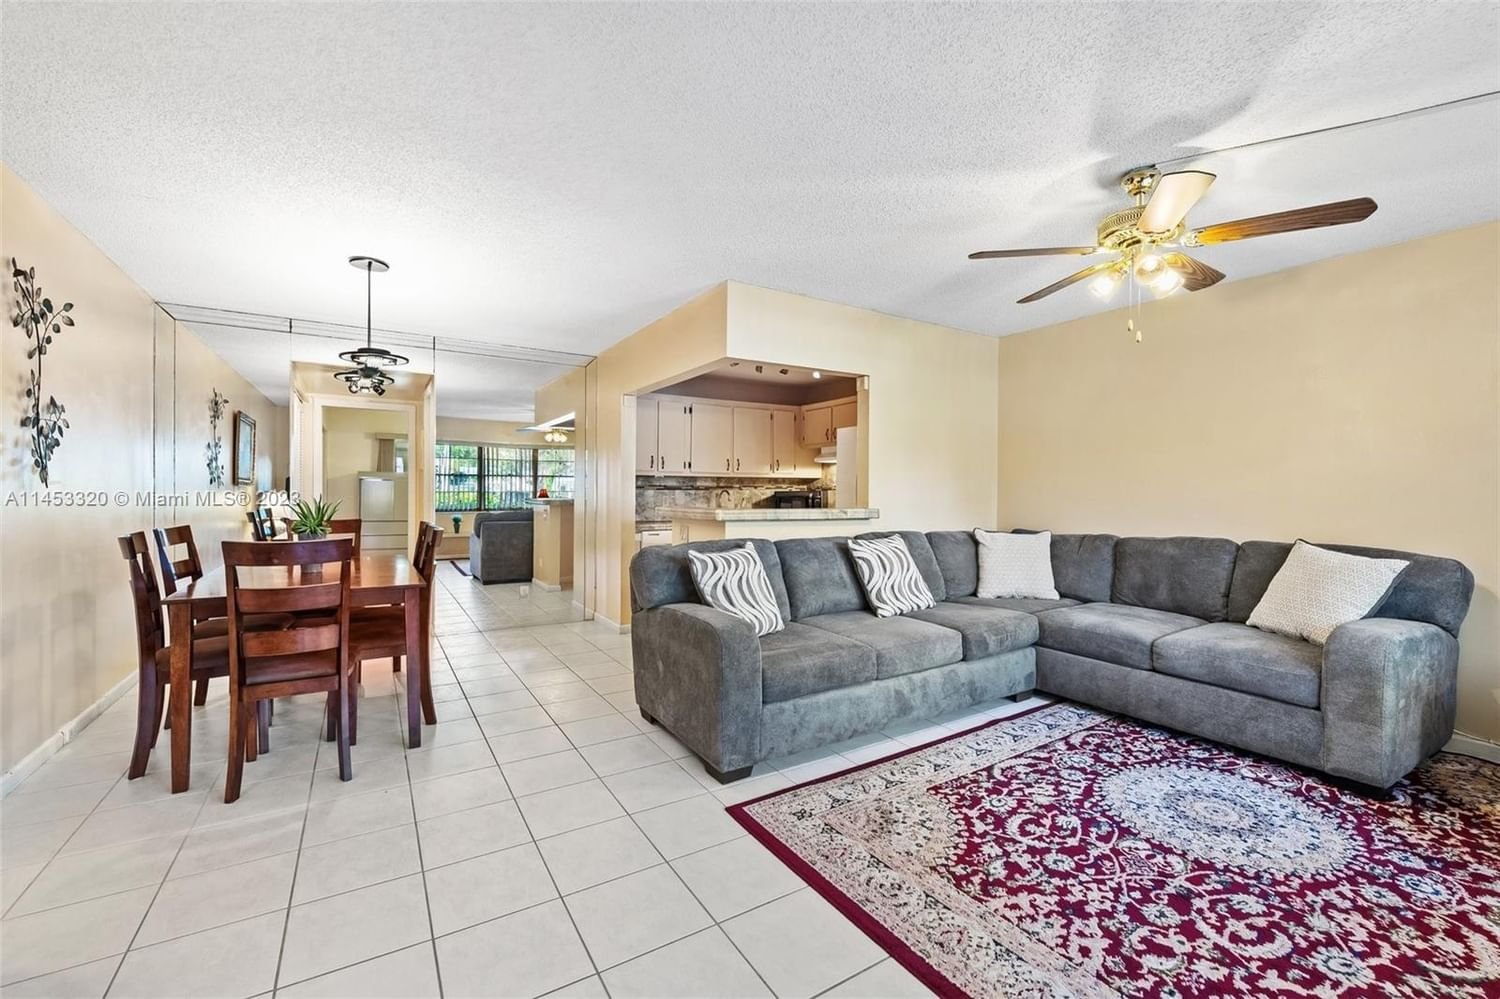 Real estate property located at 7 Prescott A #7, Broward County, PRESCOTT A CONDO, Deerfield Beach, FL